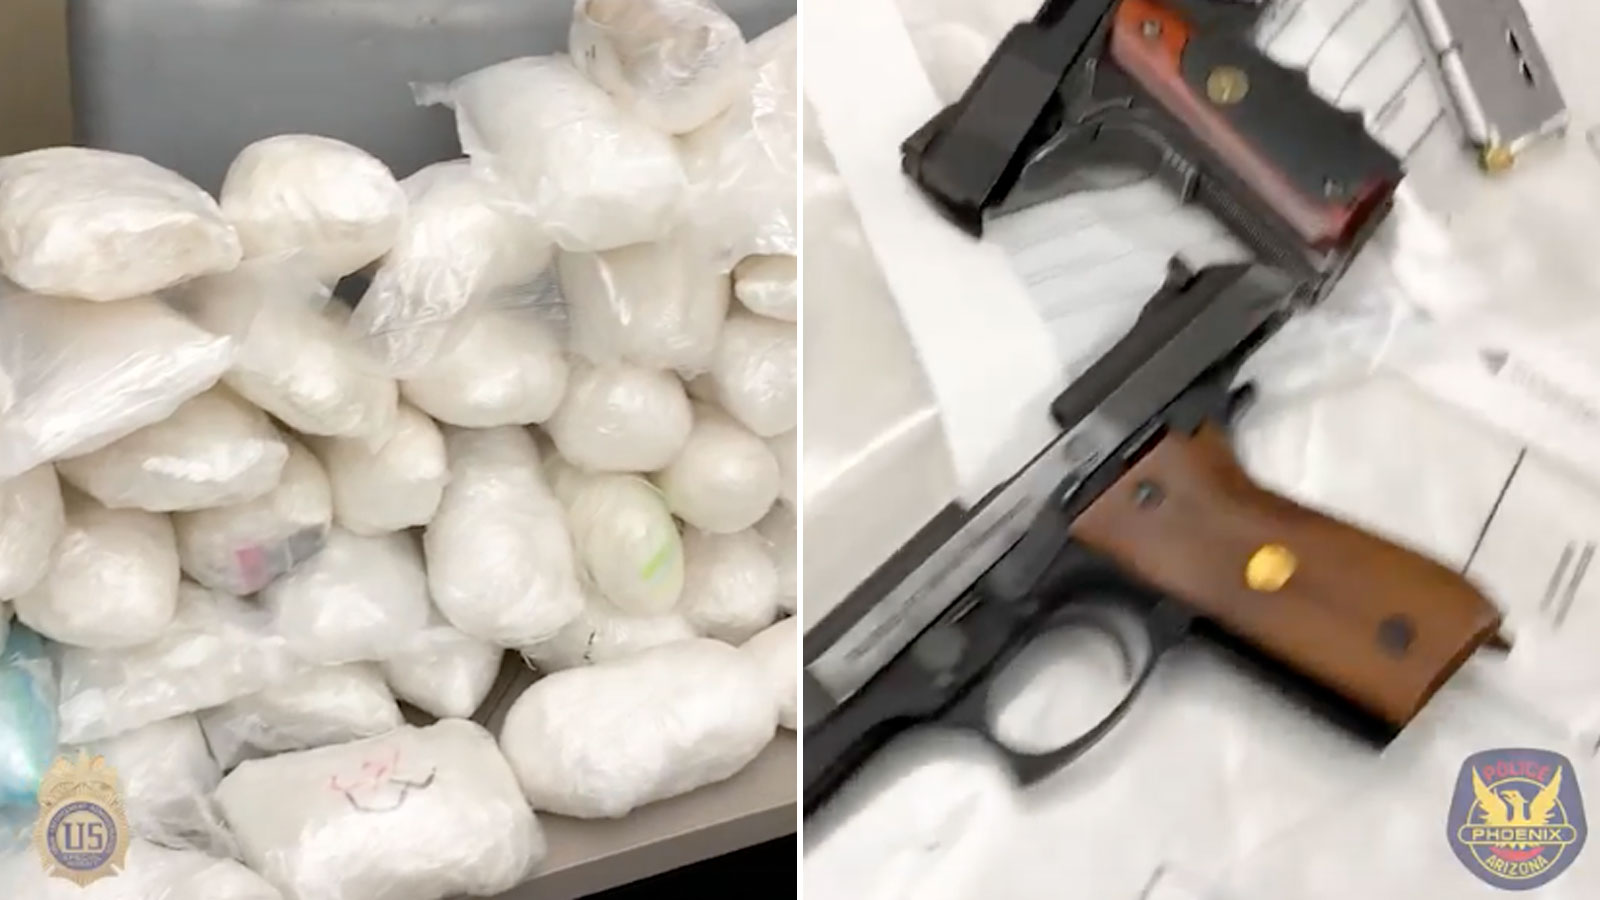 4 arrested, 375,000 suspected fentanyl pills seized in massive Phoenix drug bust